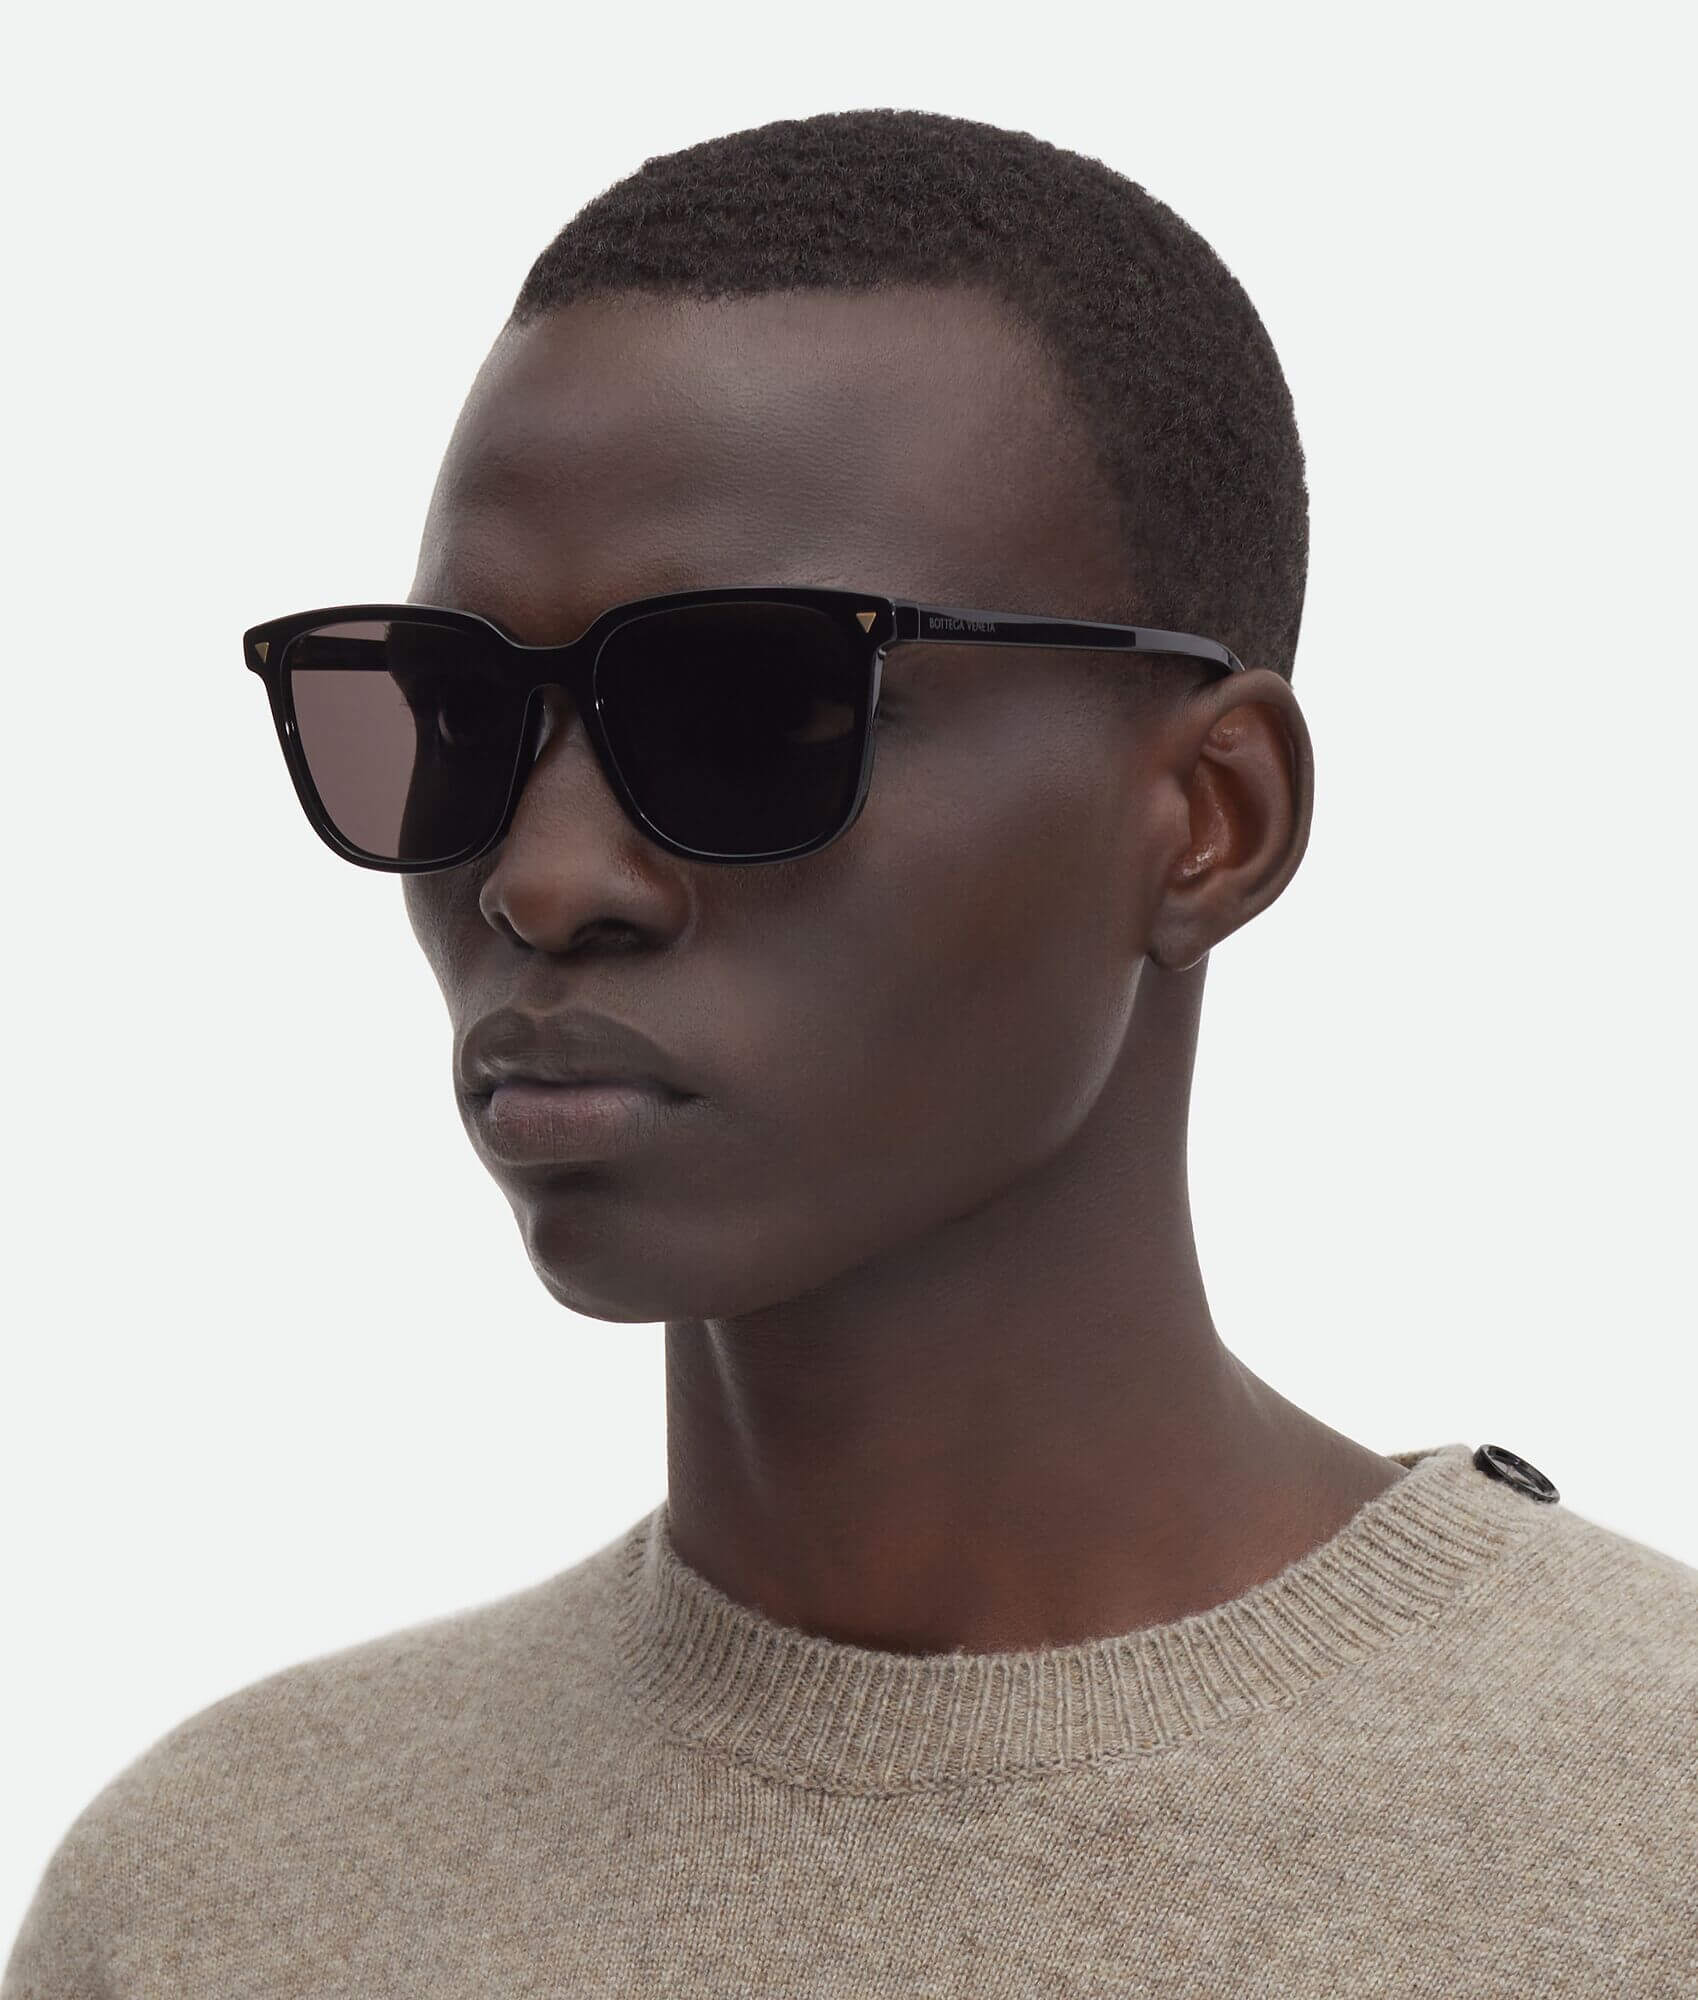 Bottega Veneta Soft Recycled Acetate Square Sunglasses in Black available at The New Trend Australia.